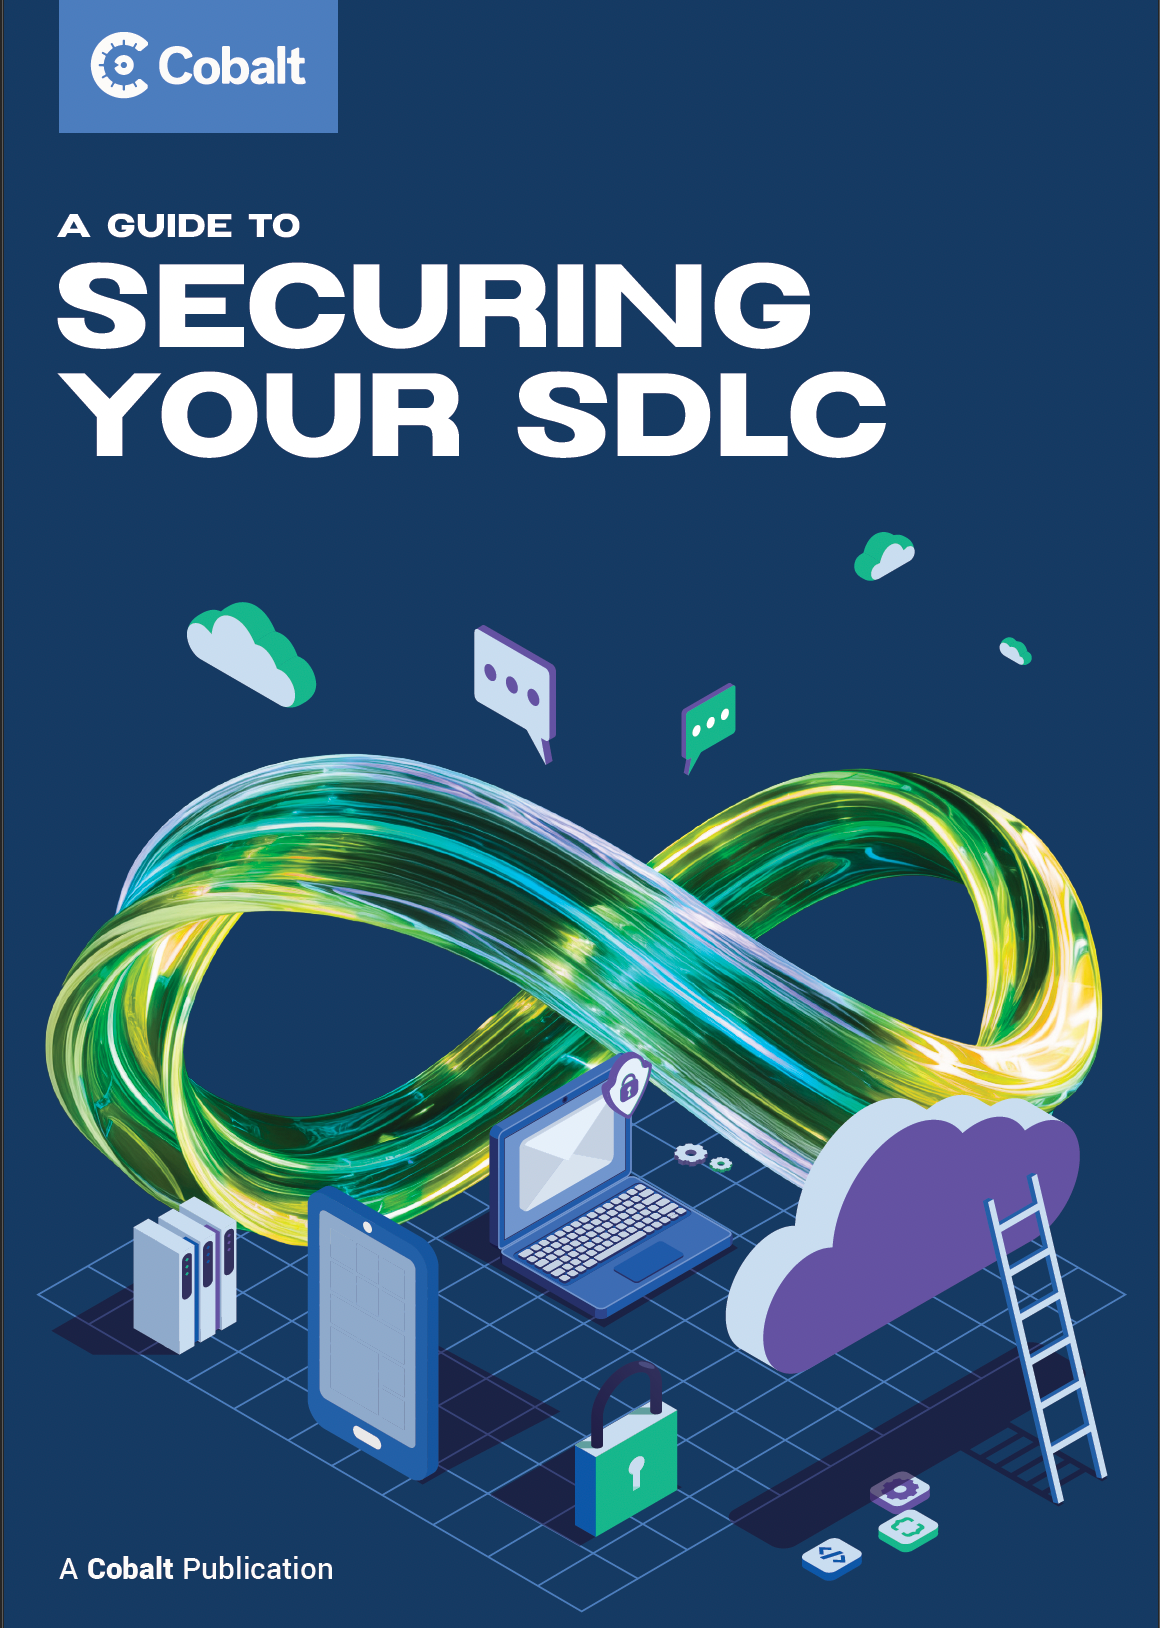 Secure-SDLC-guide-cover-image